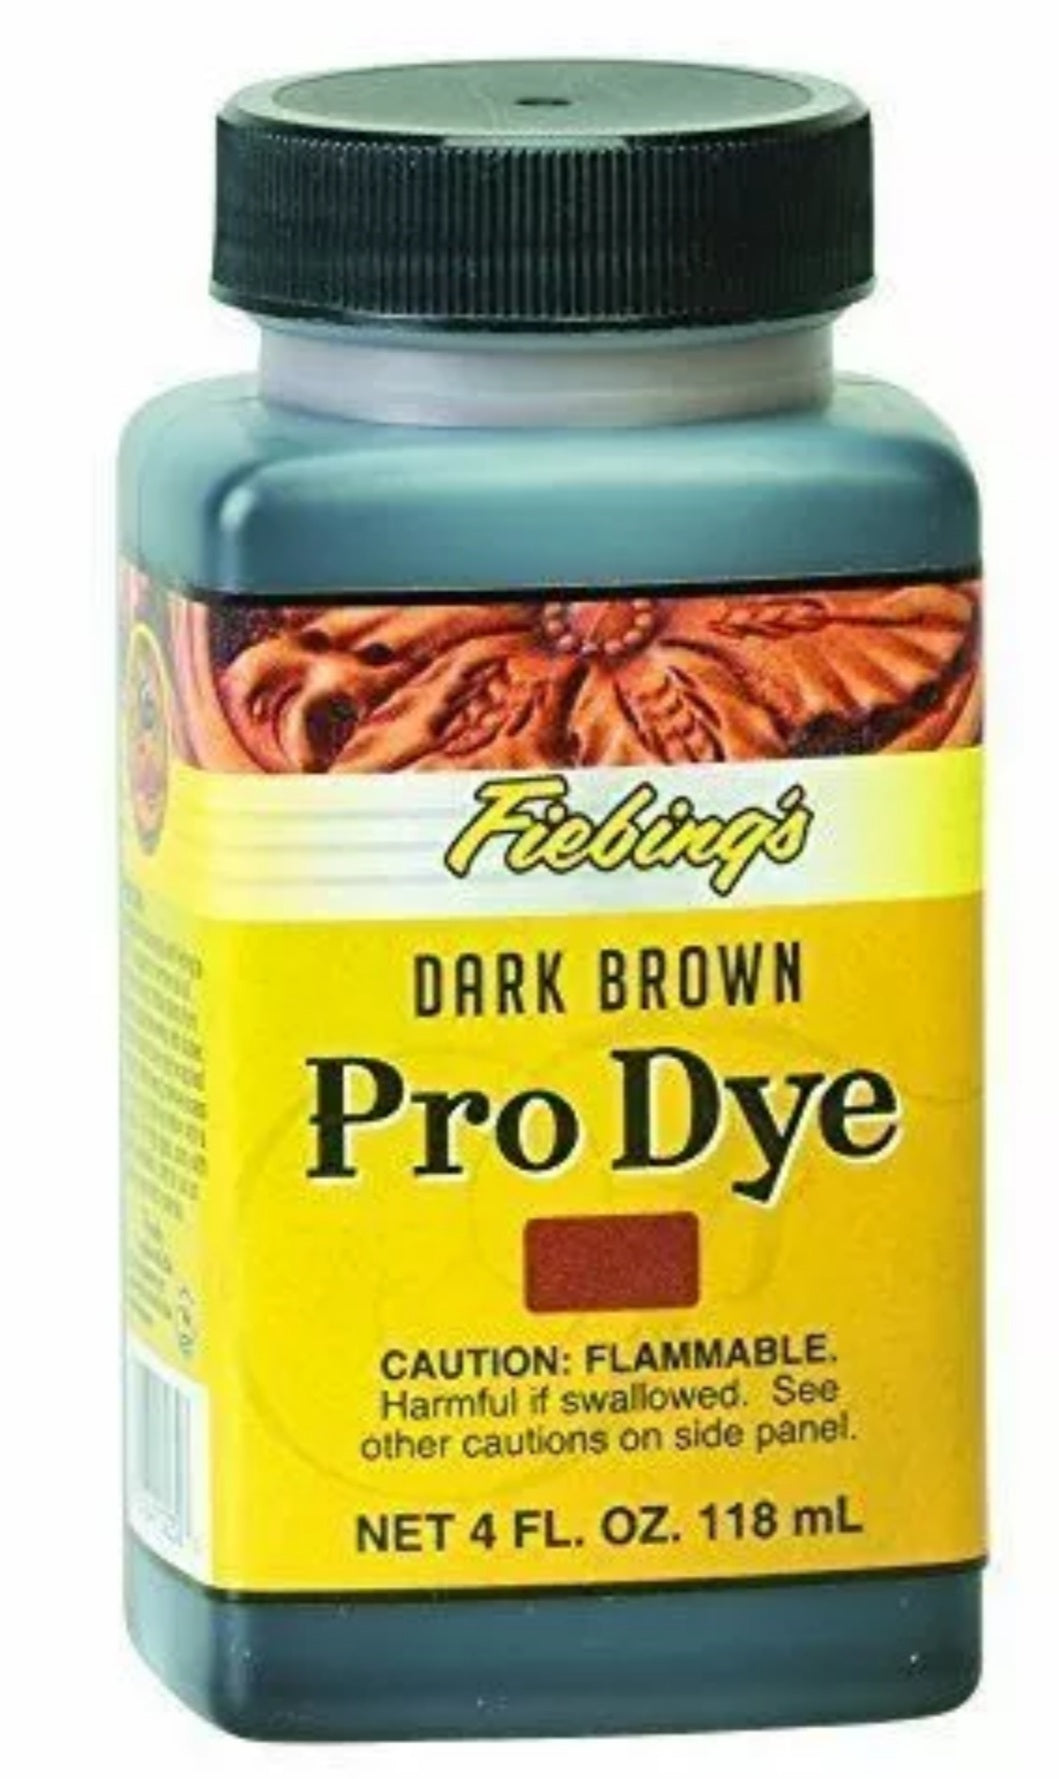 Pro Dye Dark Brown